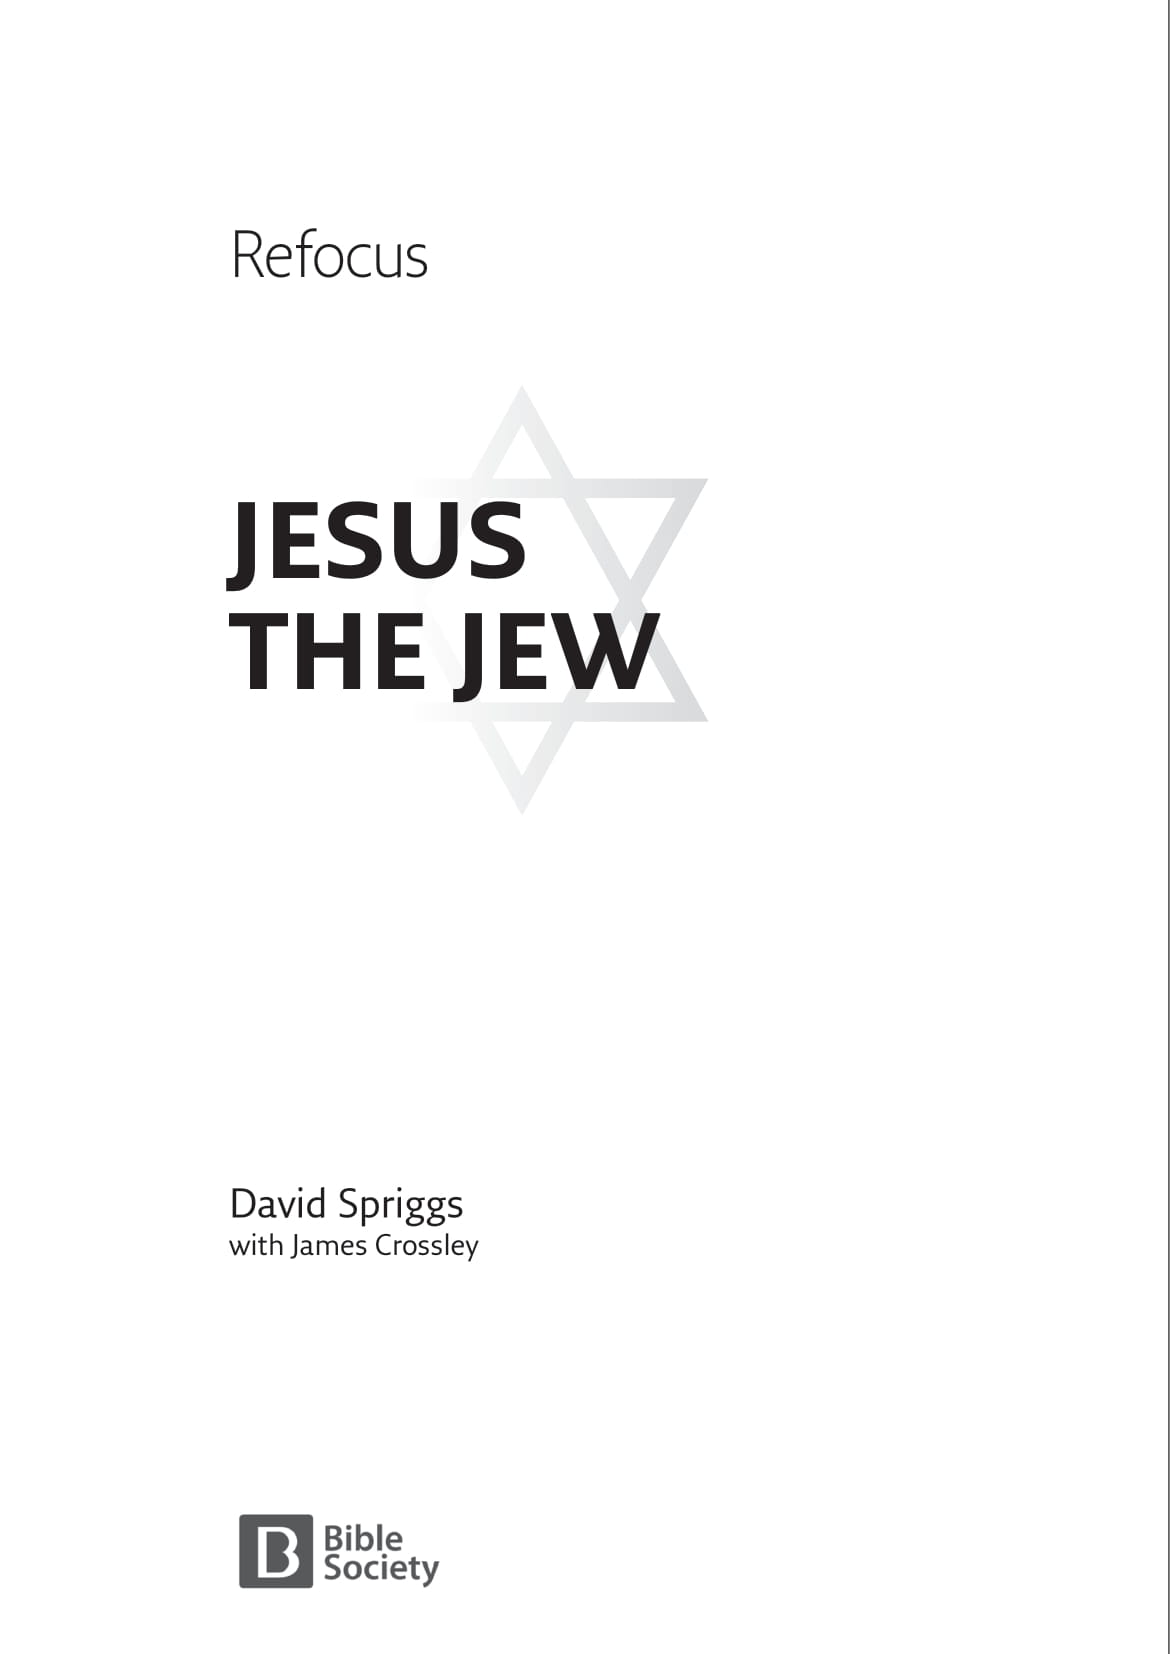 Jesus the Jew (digital product)